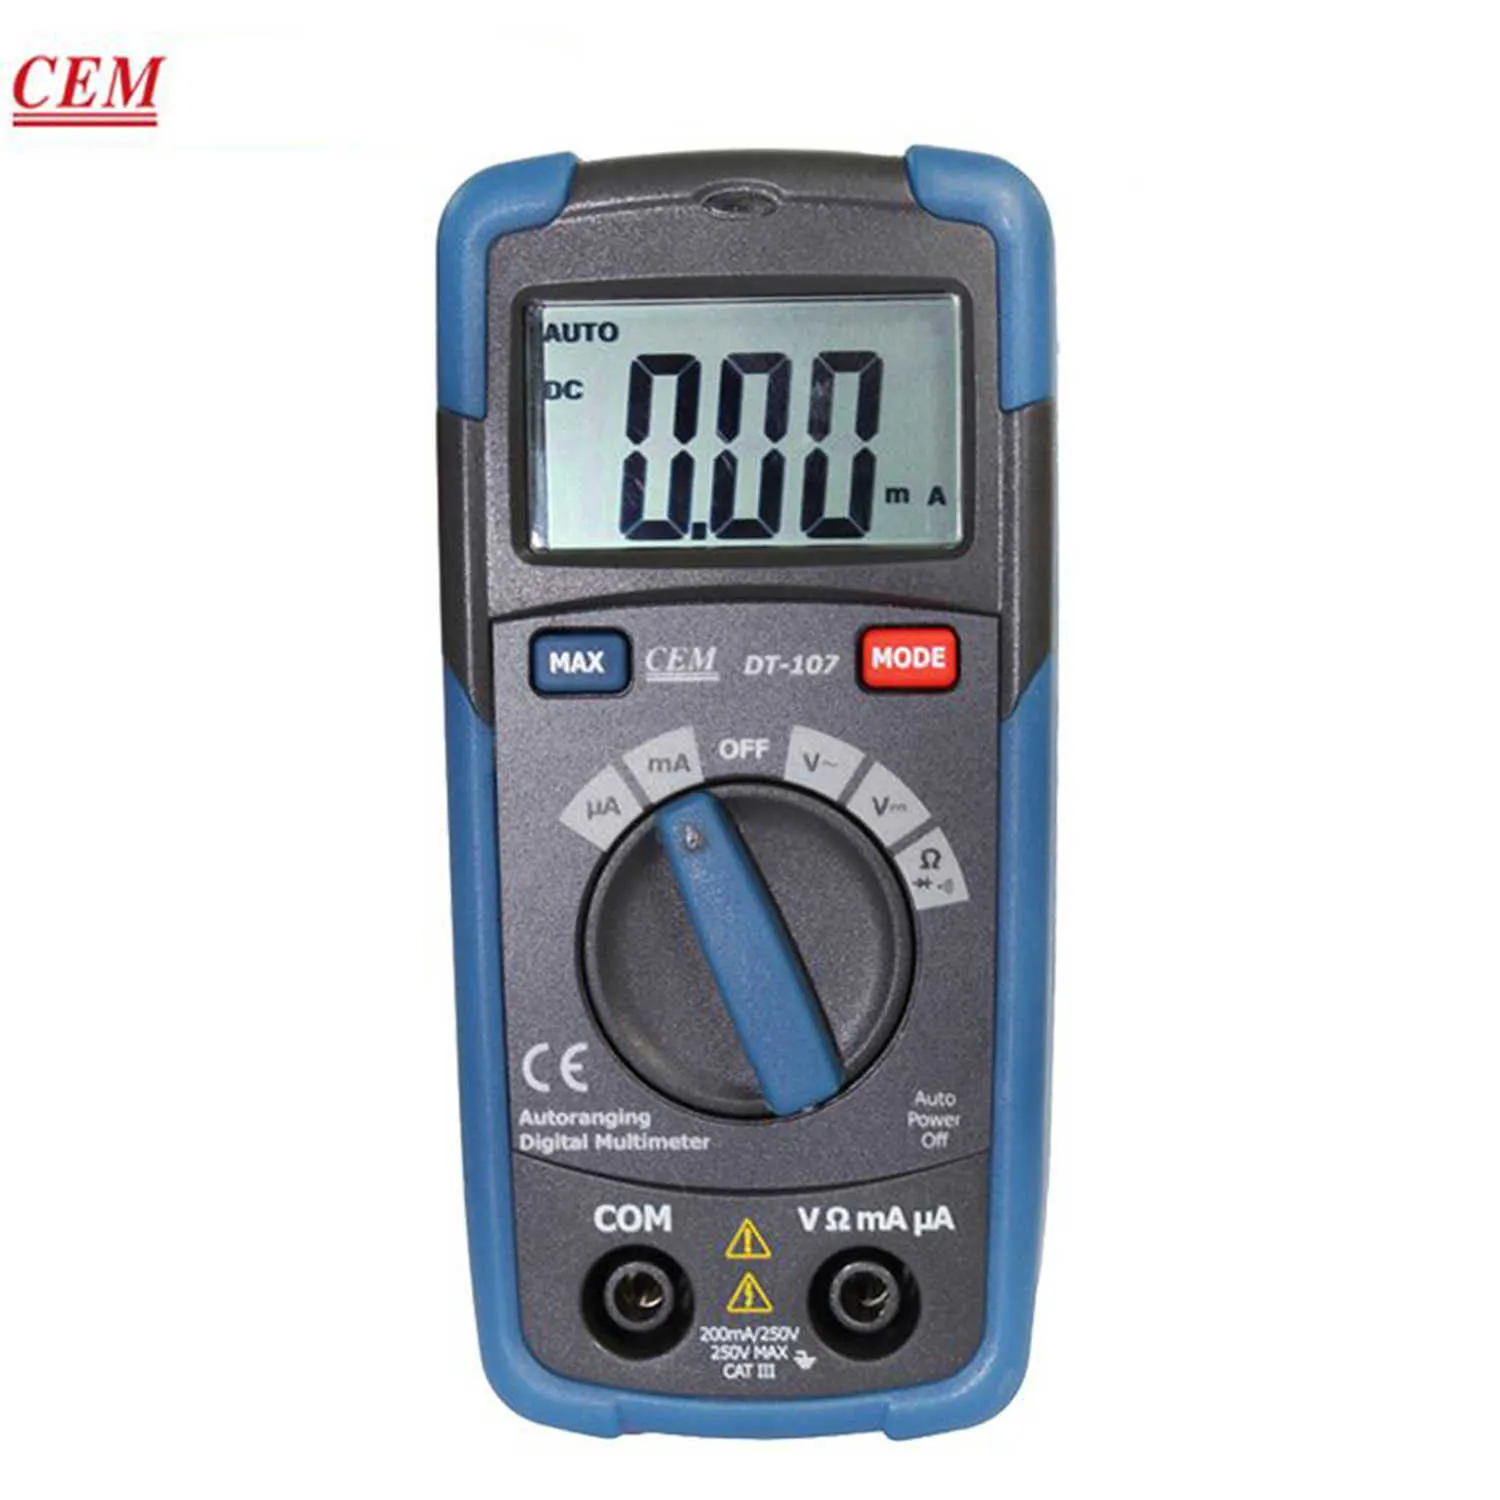 CEM DT-107 Pocket Digital Multimeter는 다기능 자동 측정 3에서 1 e 테스터 유형의 전체 보호 포켓 유형을 제공합니다.